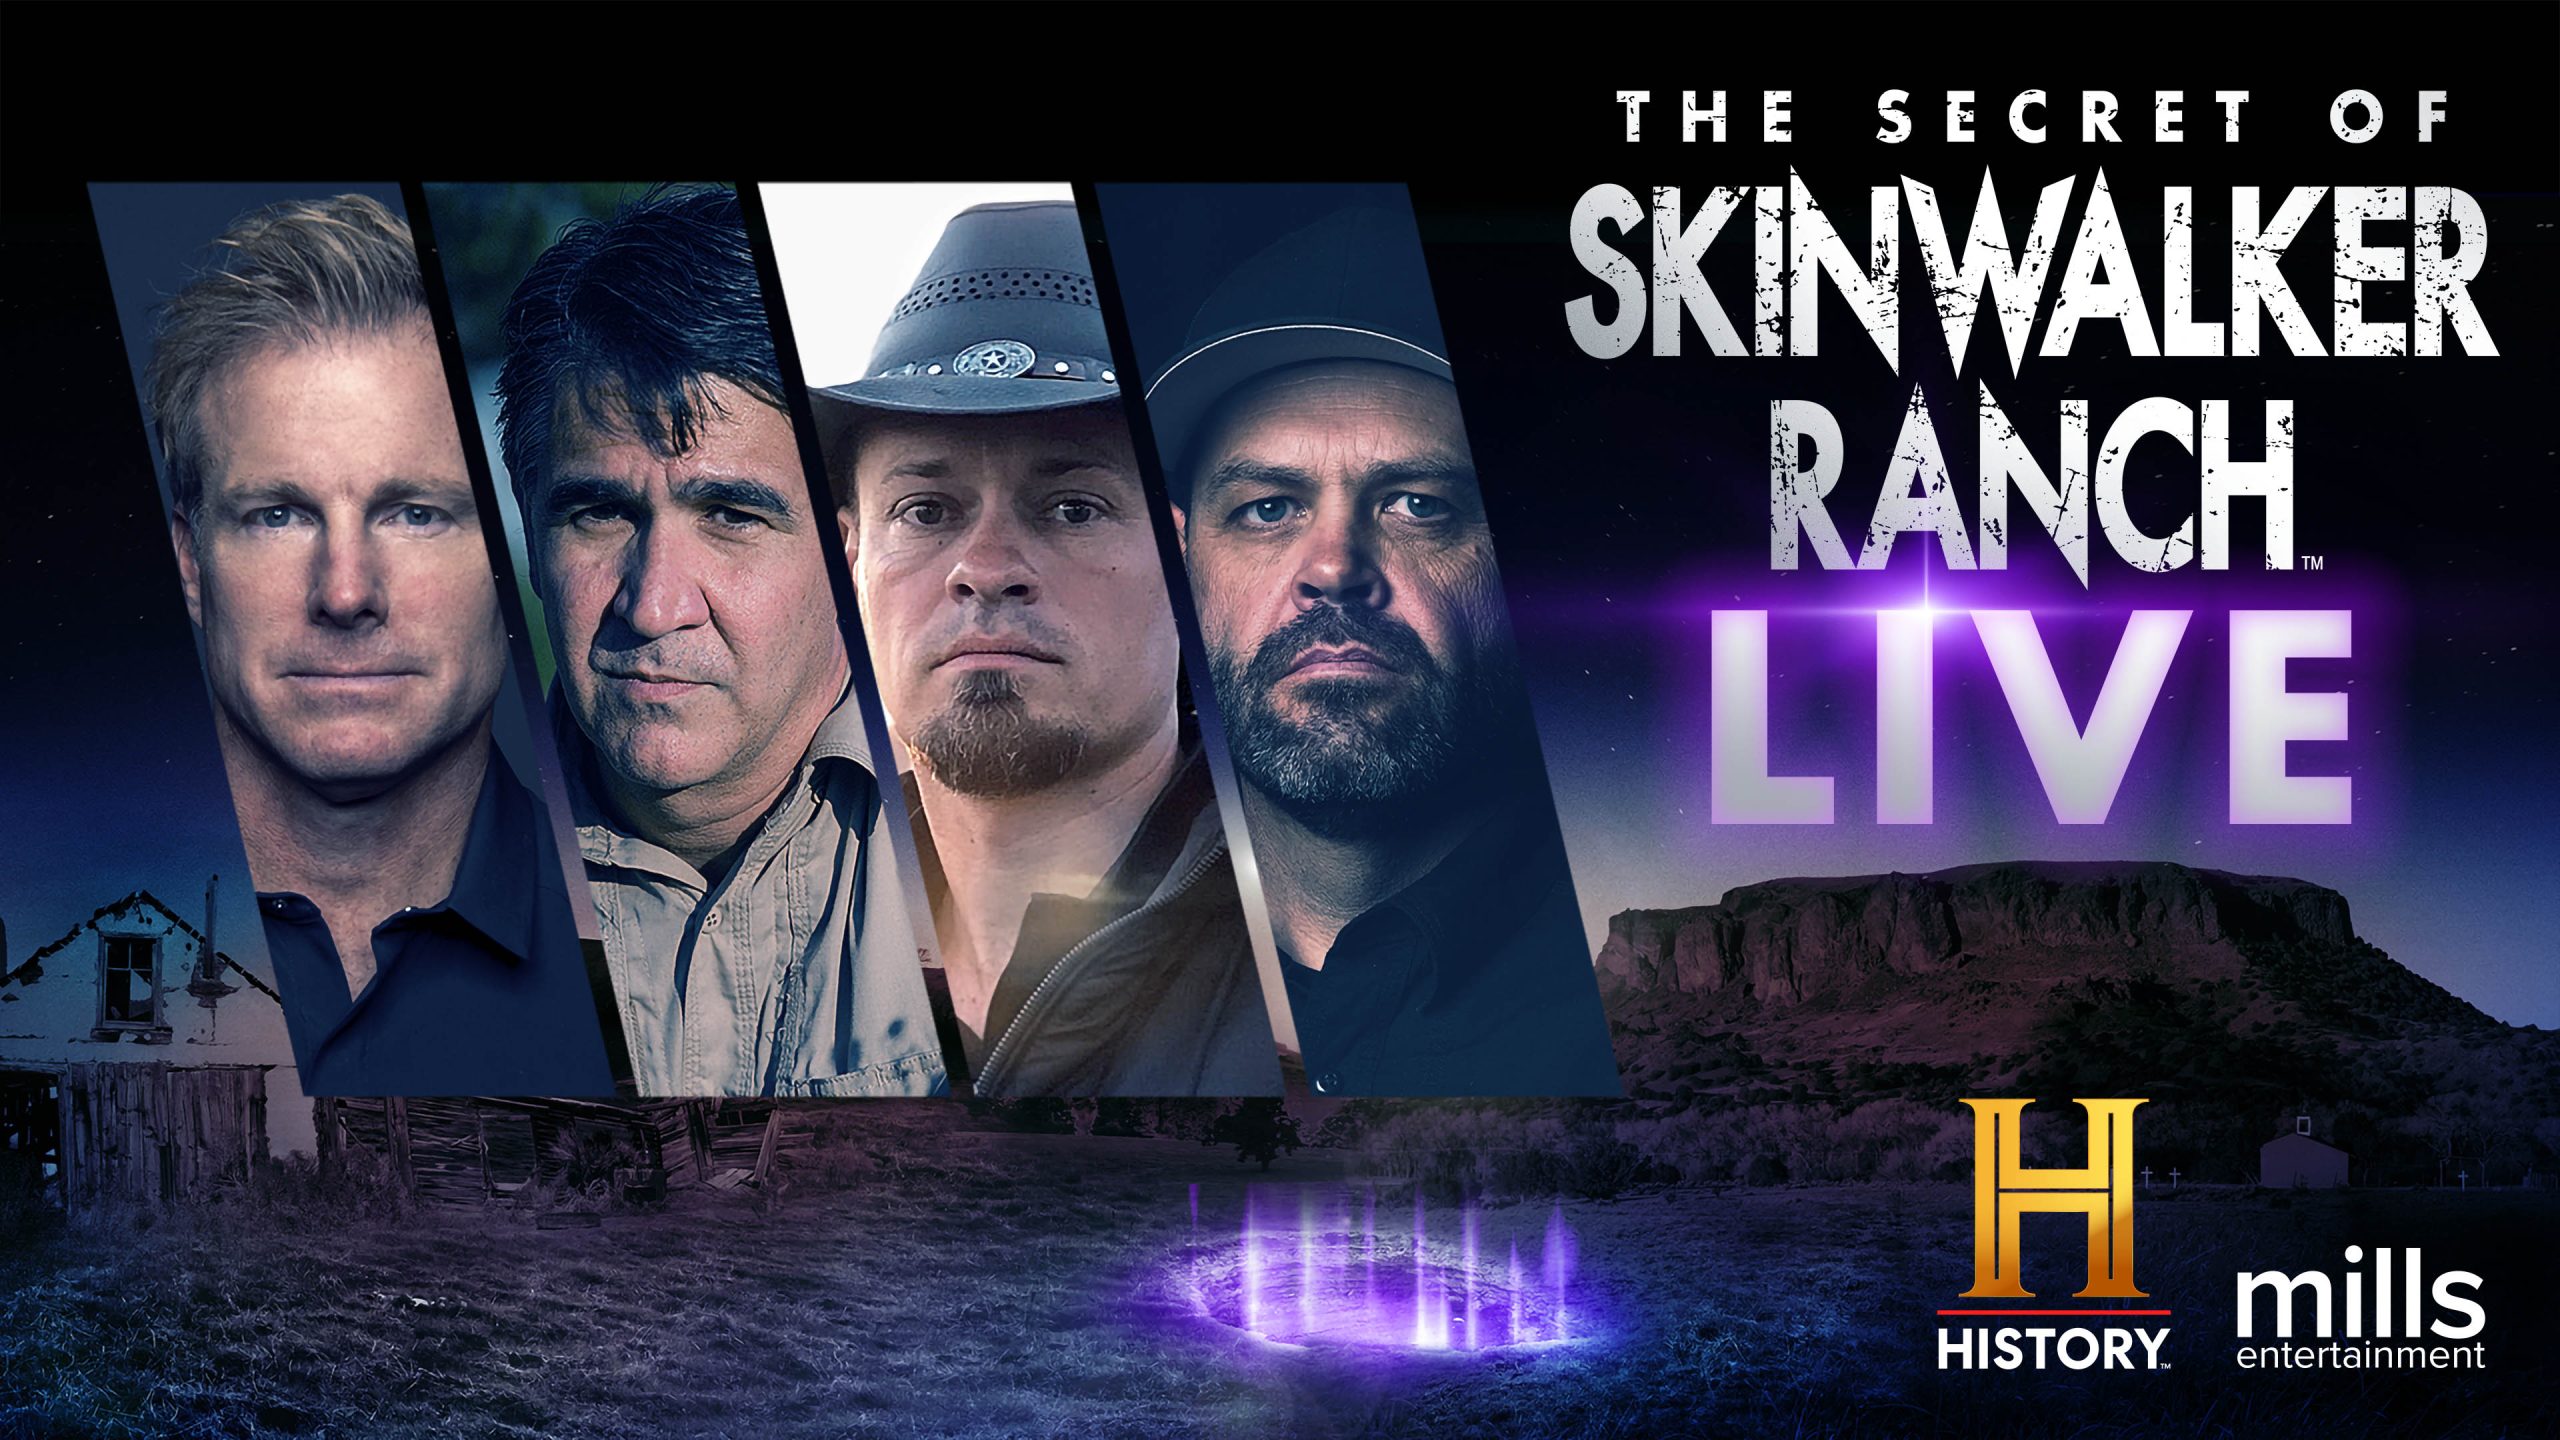 The Secret of Skinwalker Ranch Live